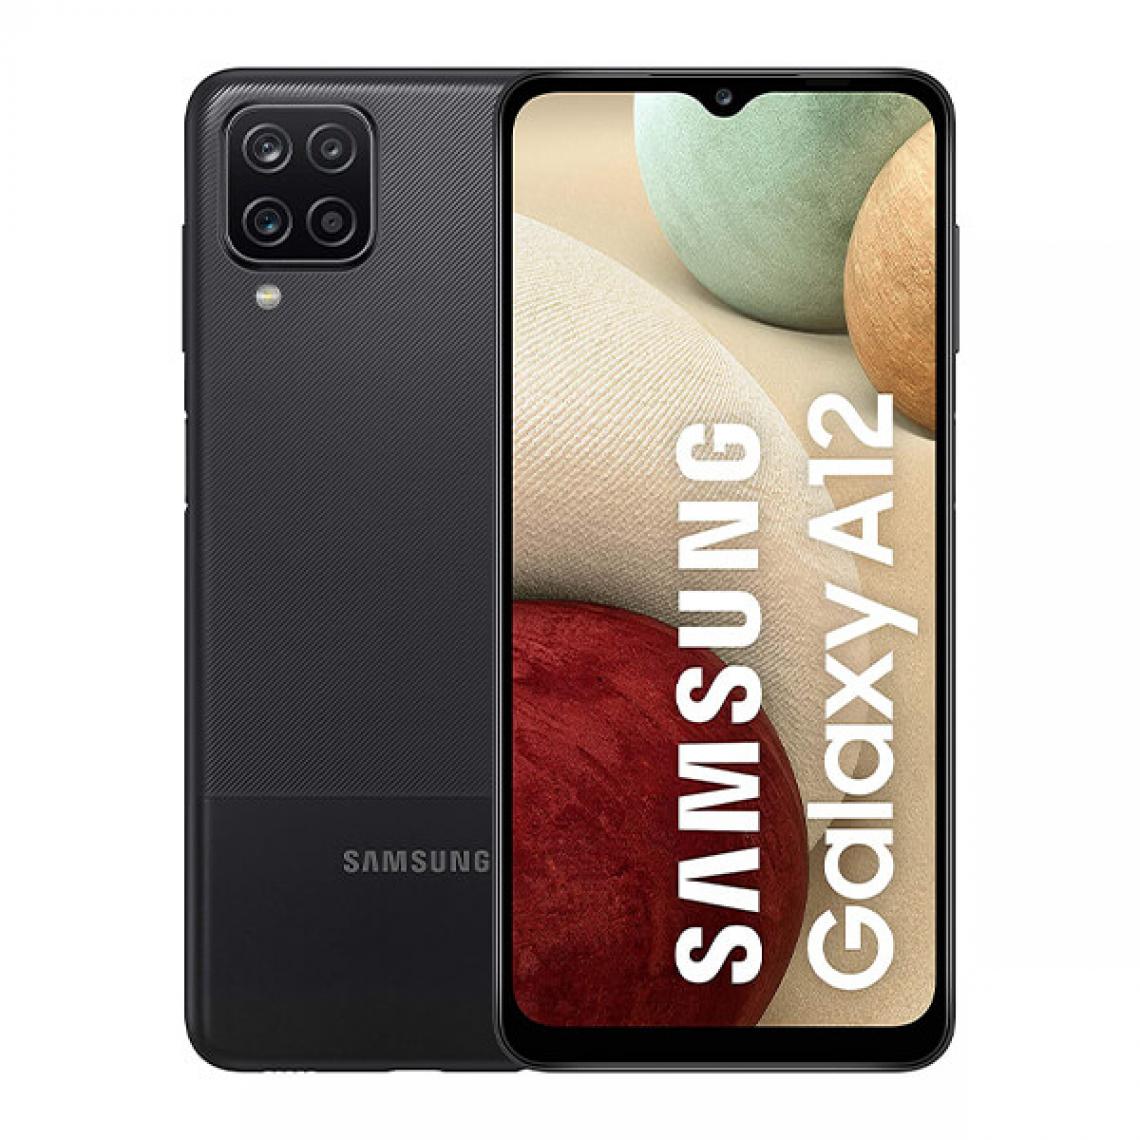 Samsung - Samsung Galaxy A12 3GB/32GB Negro (Black) Dual SIM A125F - Smartphone Android